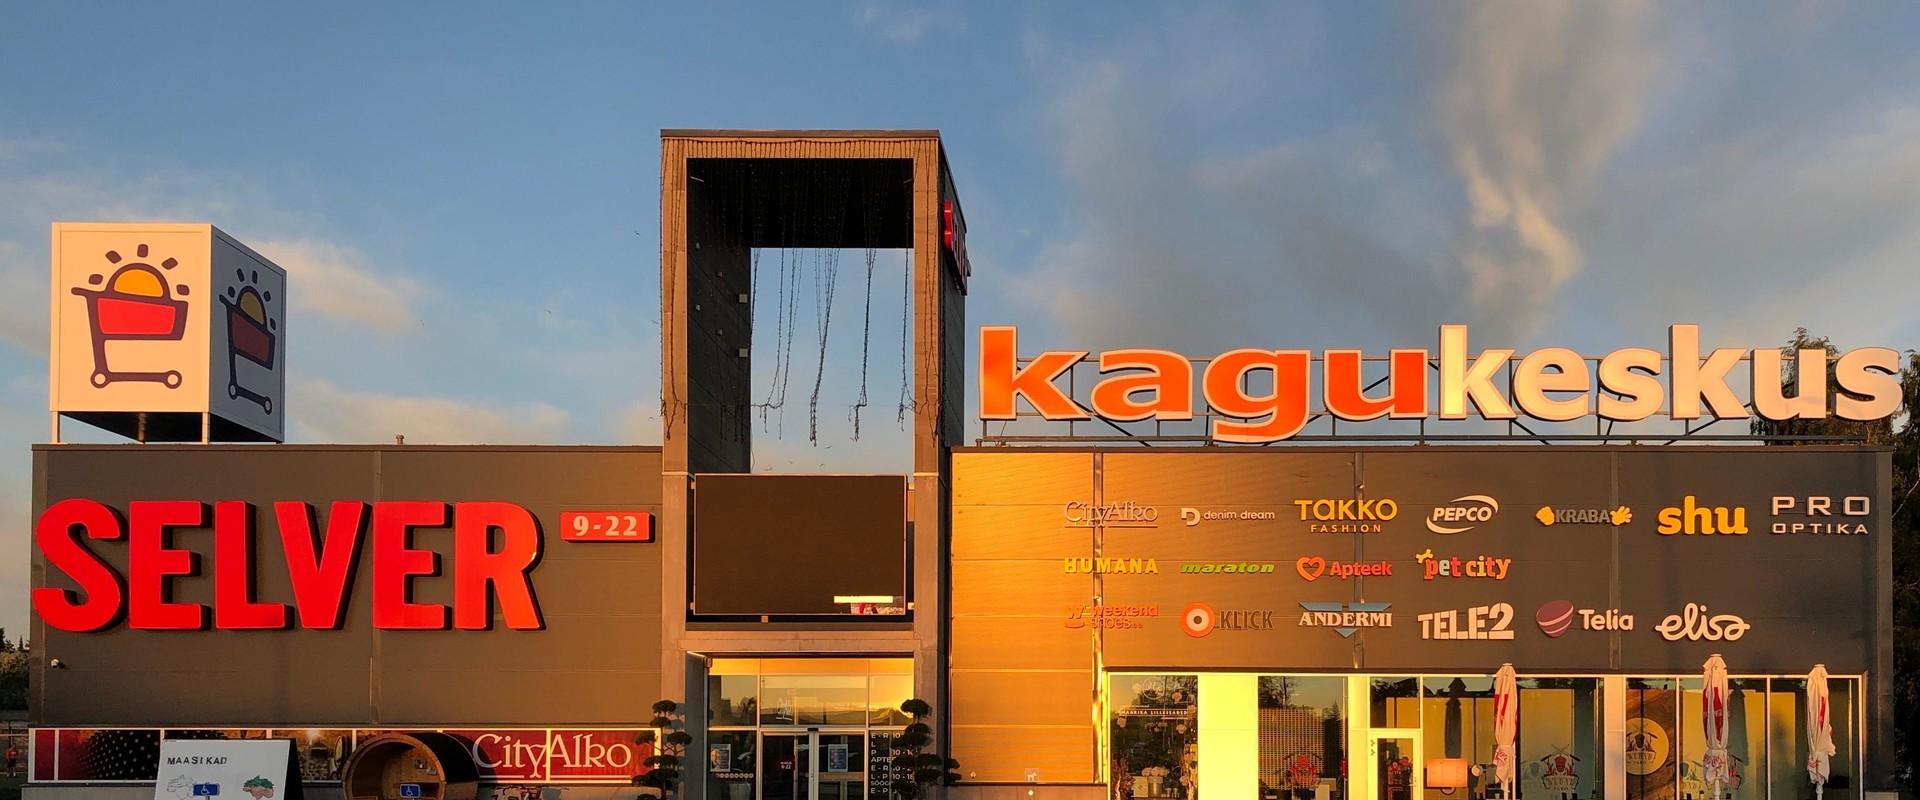 Kagukeskus shopping centre